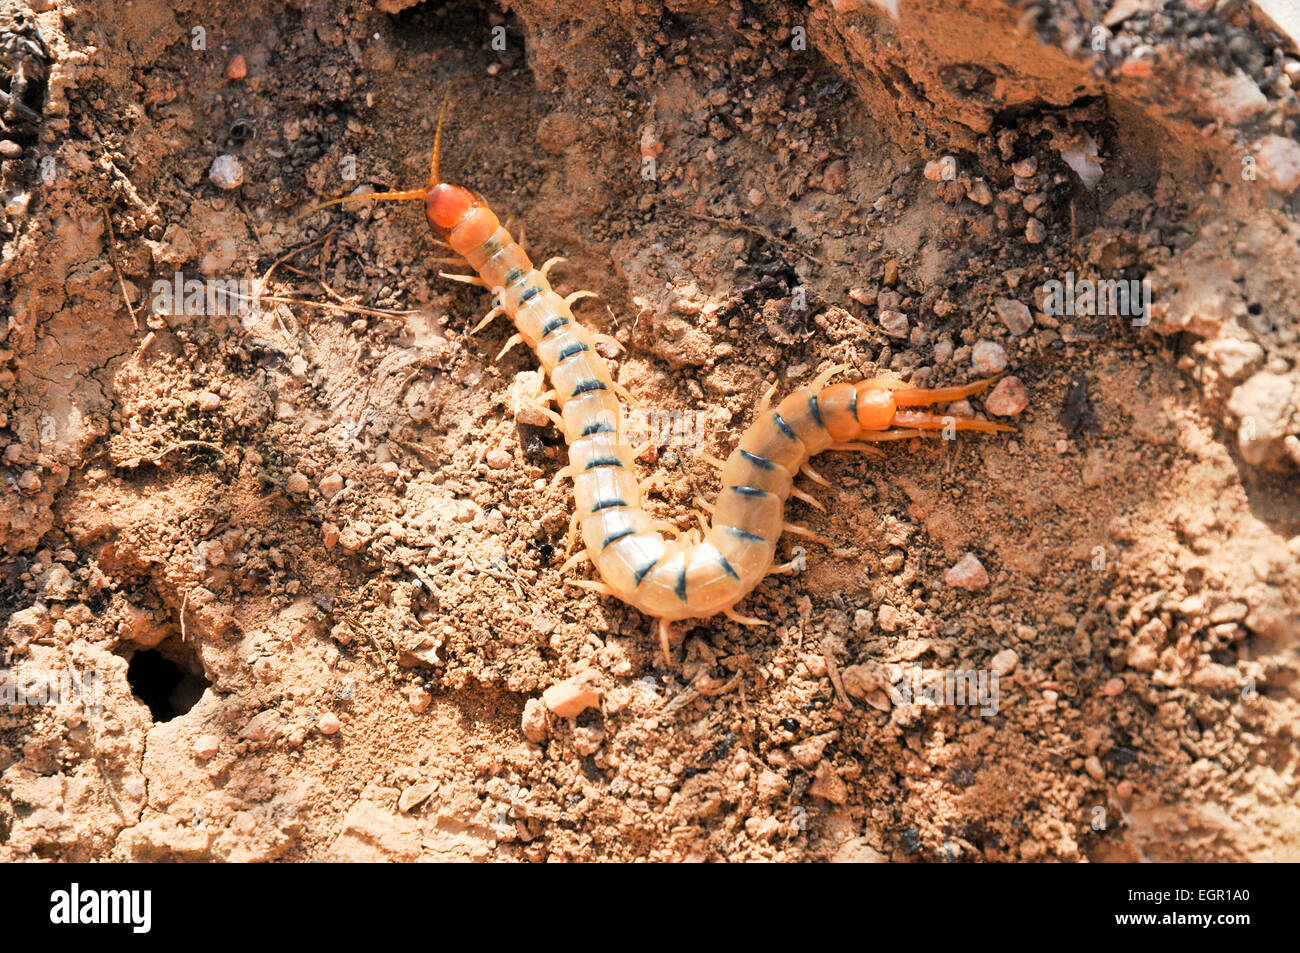 Centipede (Scolopendra) a venomous night predator. Photographed in Israel in December Stock Photo